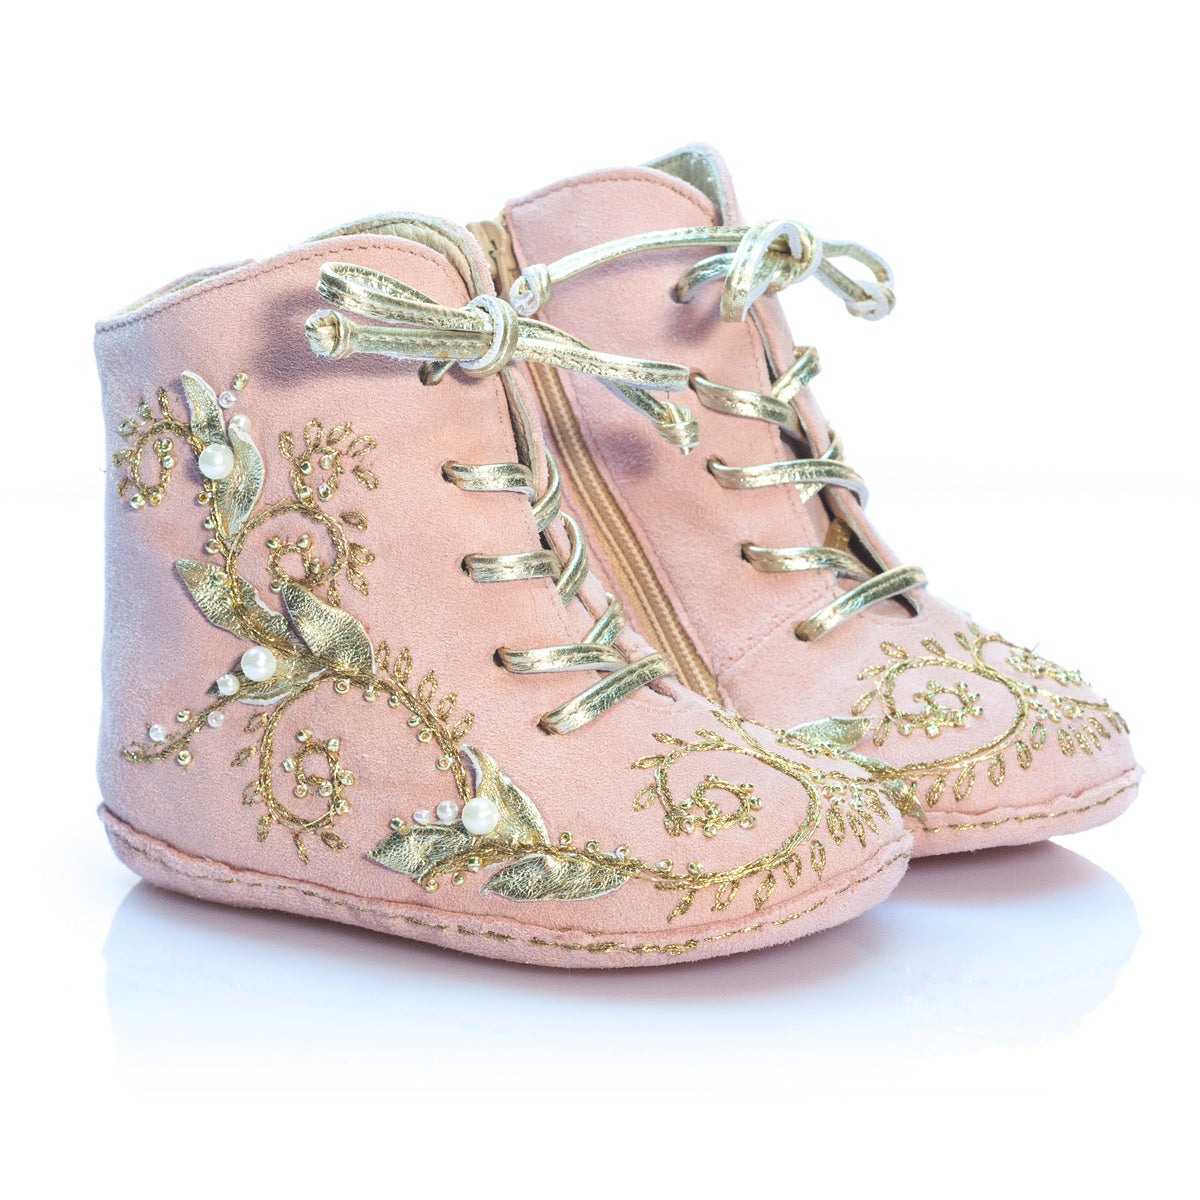 Fleur Océane - Pink - Vibys baby shoes pair 